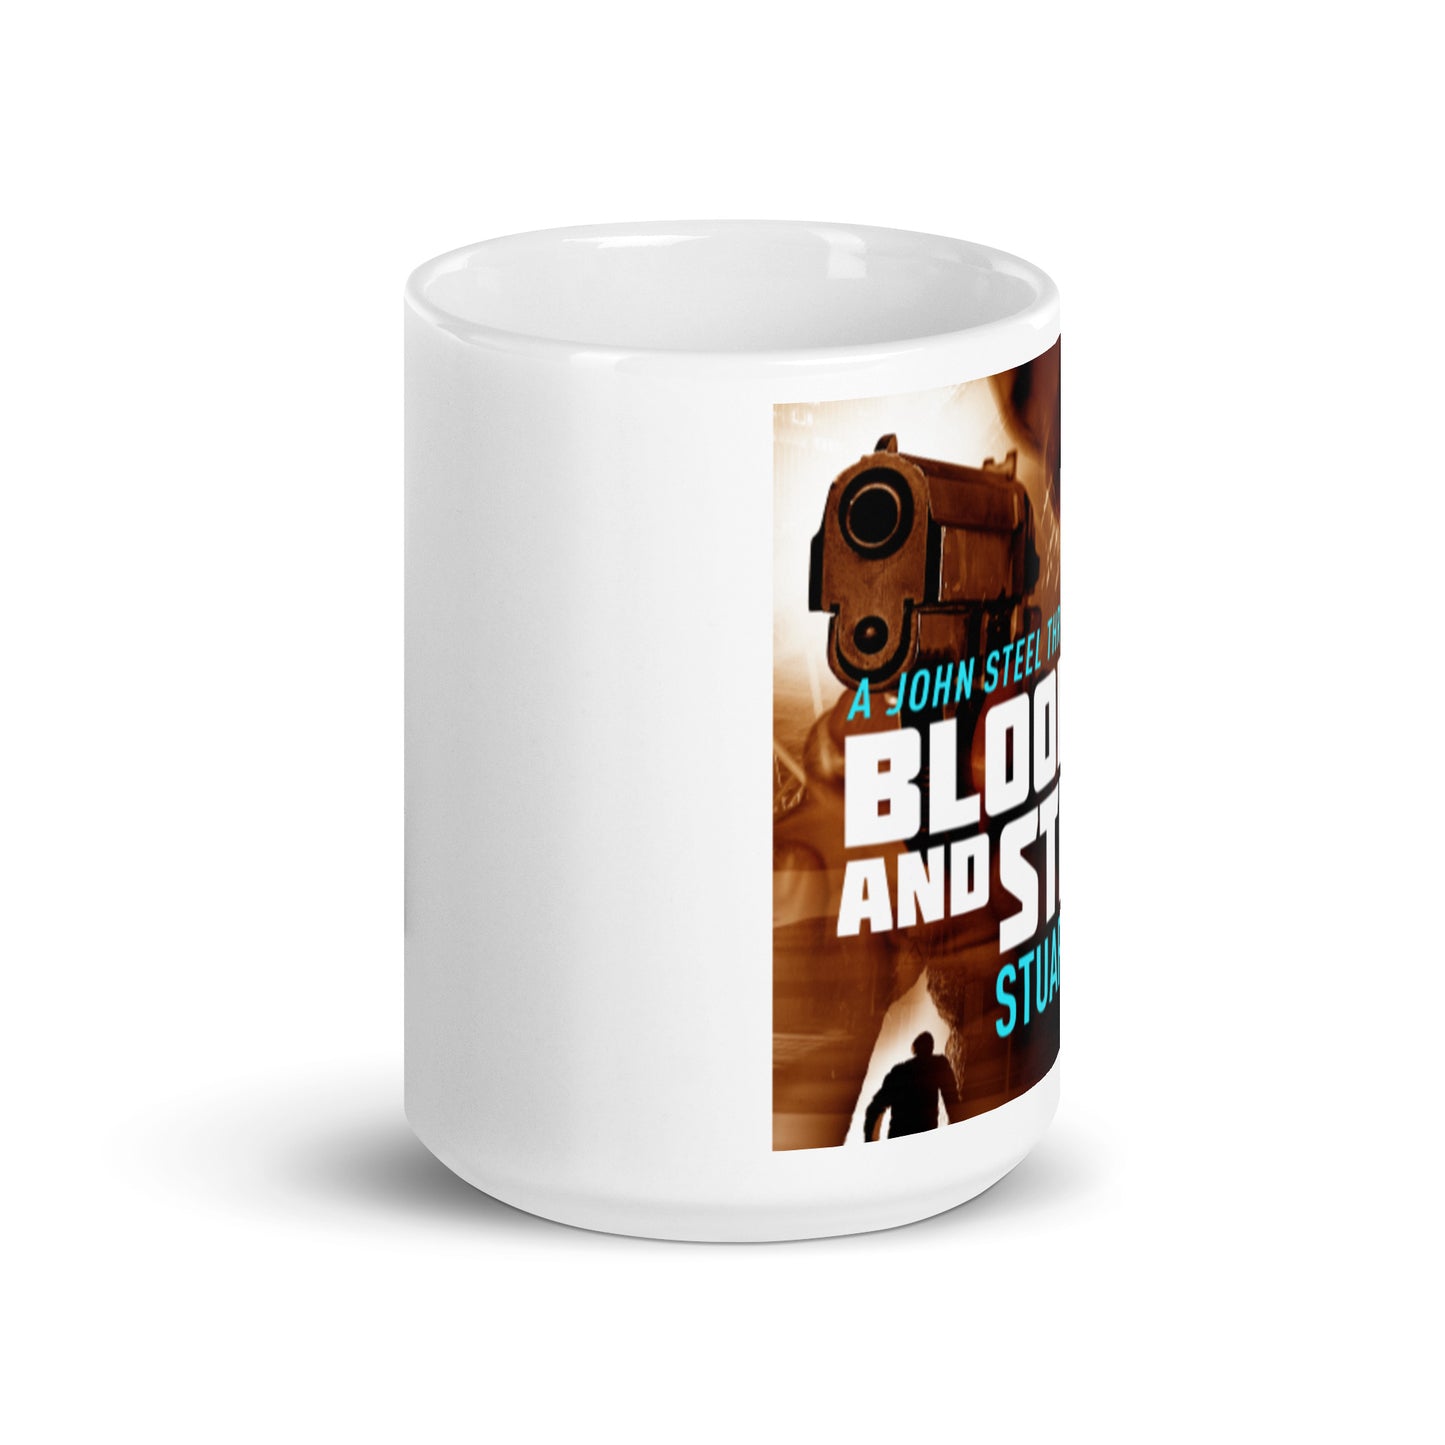 Blood And Steel - White Coffee Mug